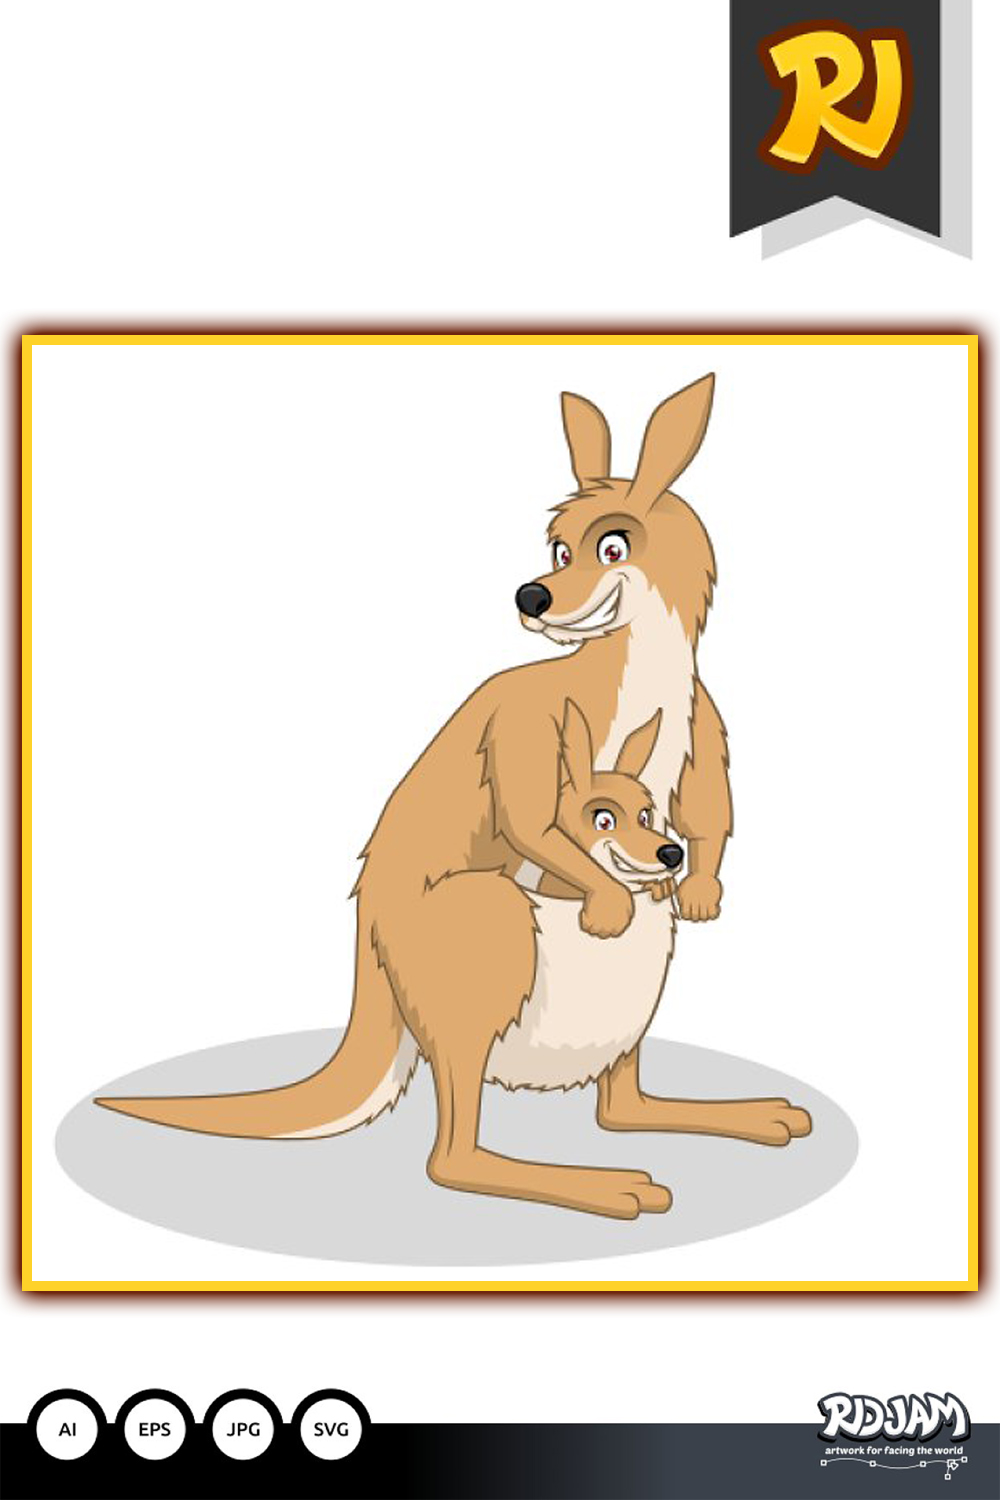 230327 kangaroo with her baby cartoon pinterest 1000 1500 716